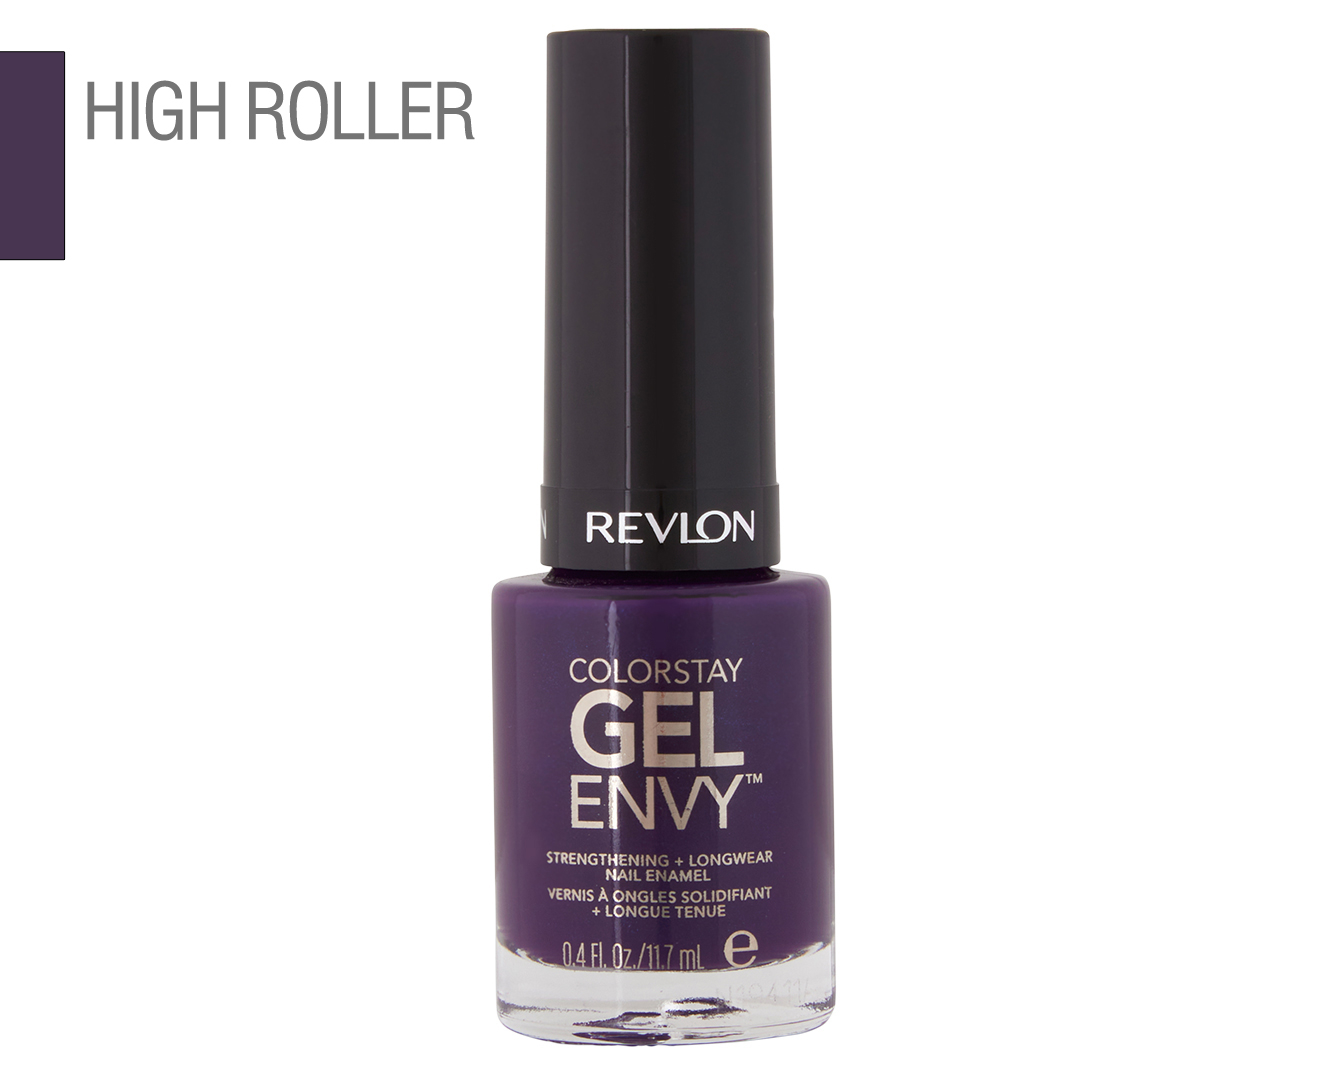 Revlon+ColorStay+Gel+Envy+in+Wild+Card.JPG 1,367×1,600 pixels | Nail polish,  Revlon gel envy, How to do nails